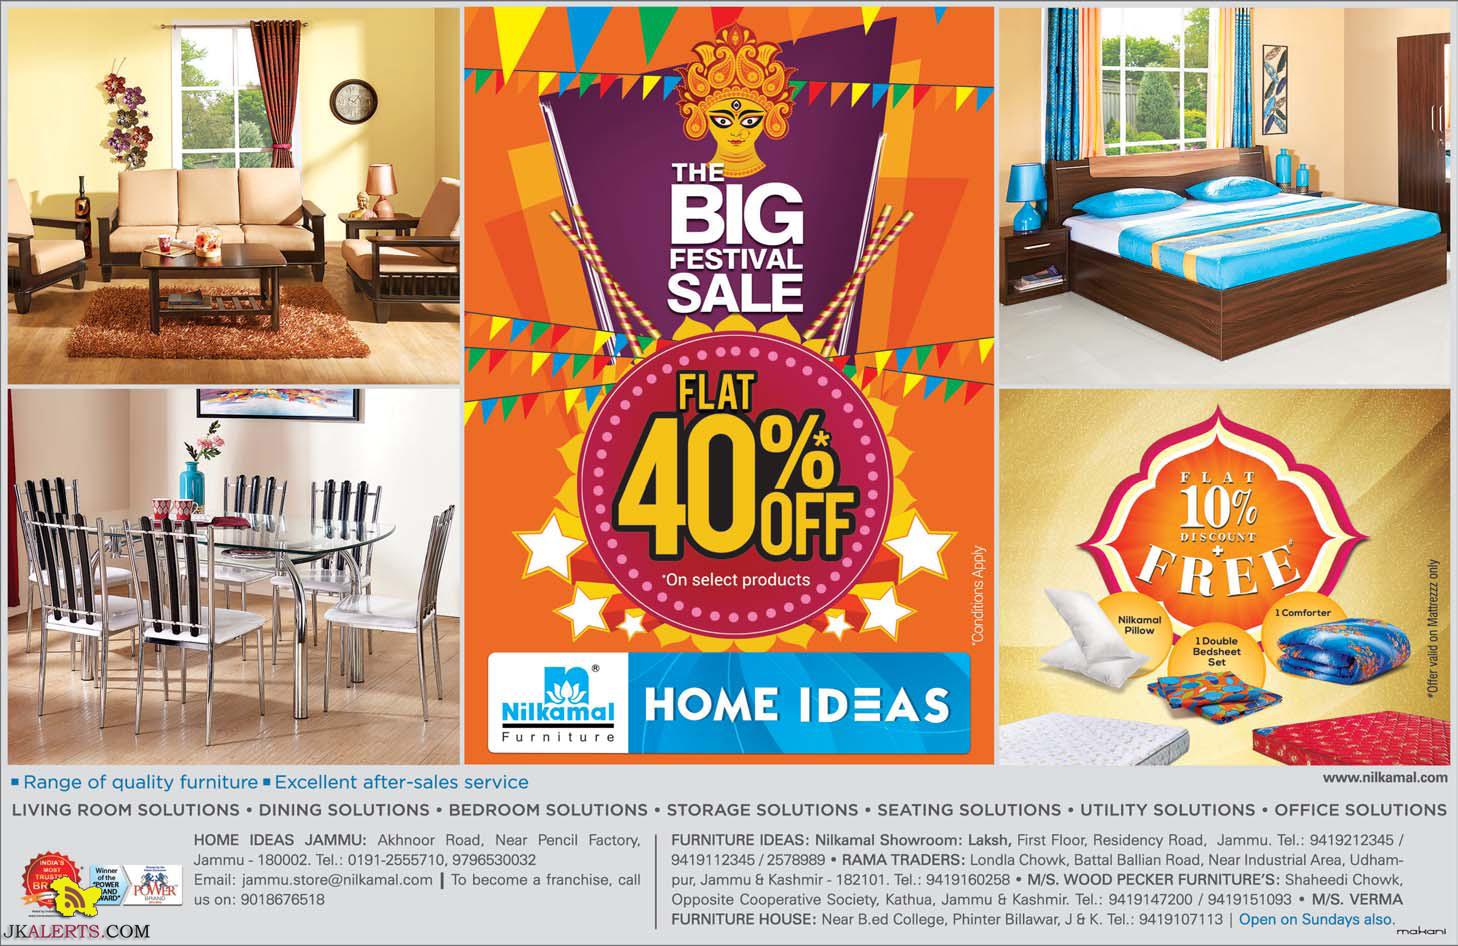 The Big Festival Navratra Sale Flat 40% off Home Ideas